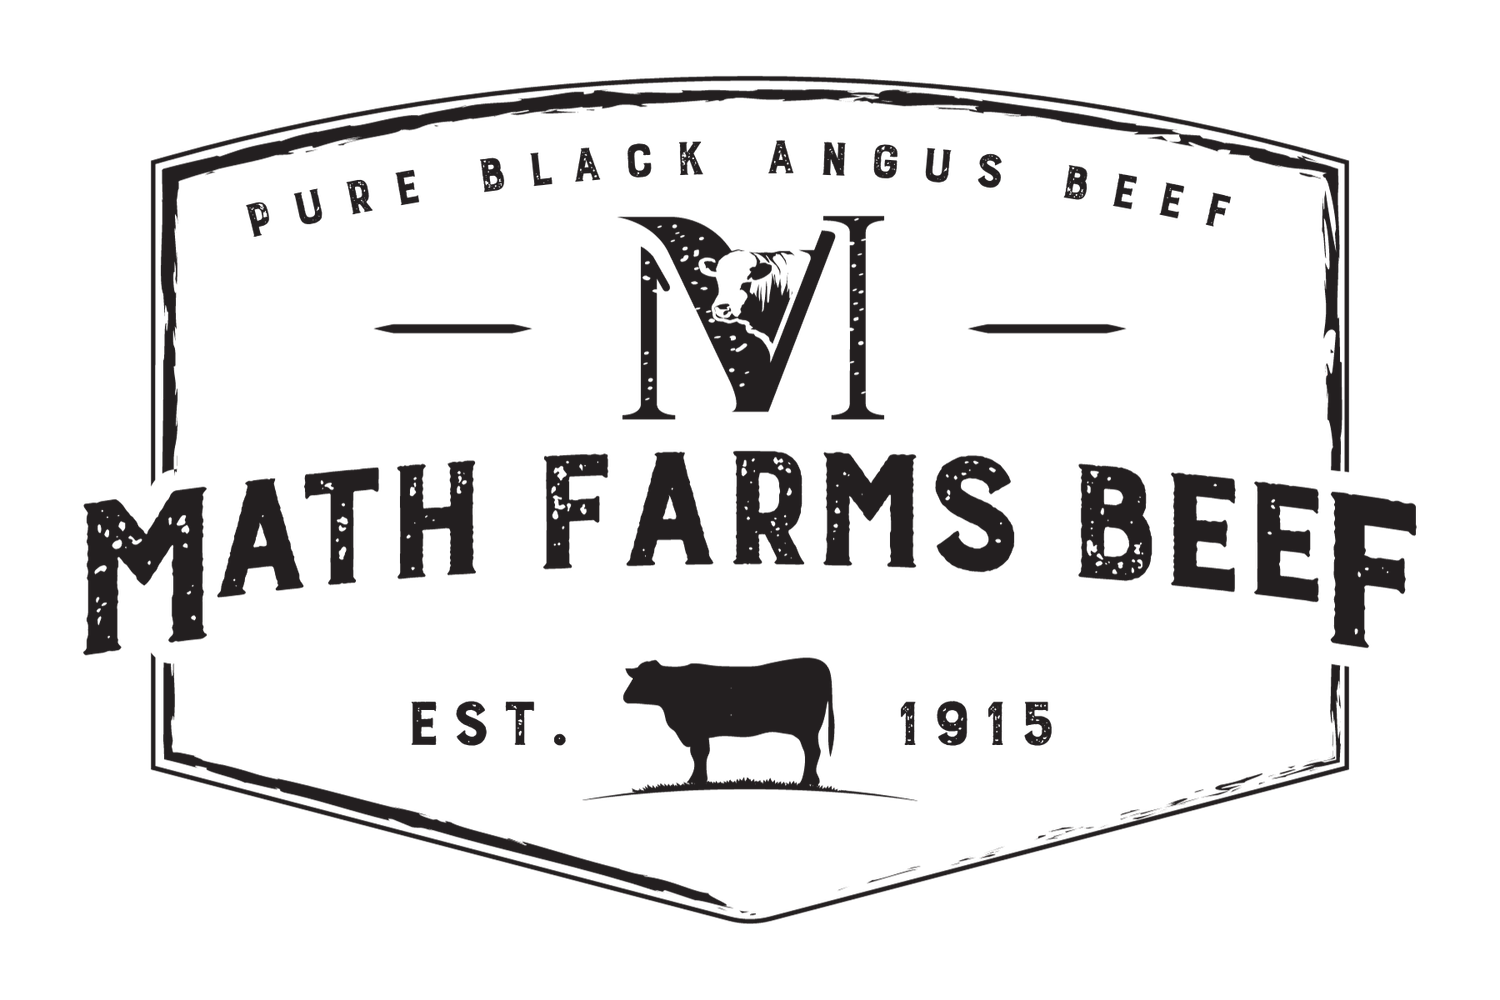 Math Farms Beef